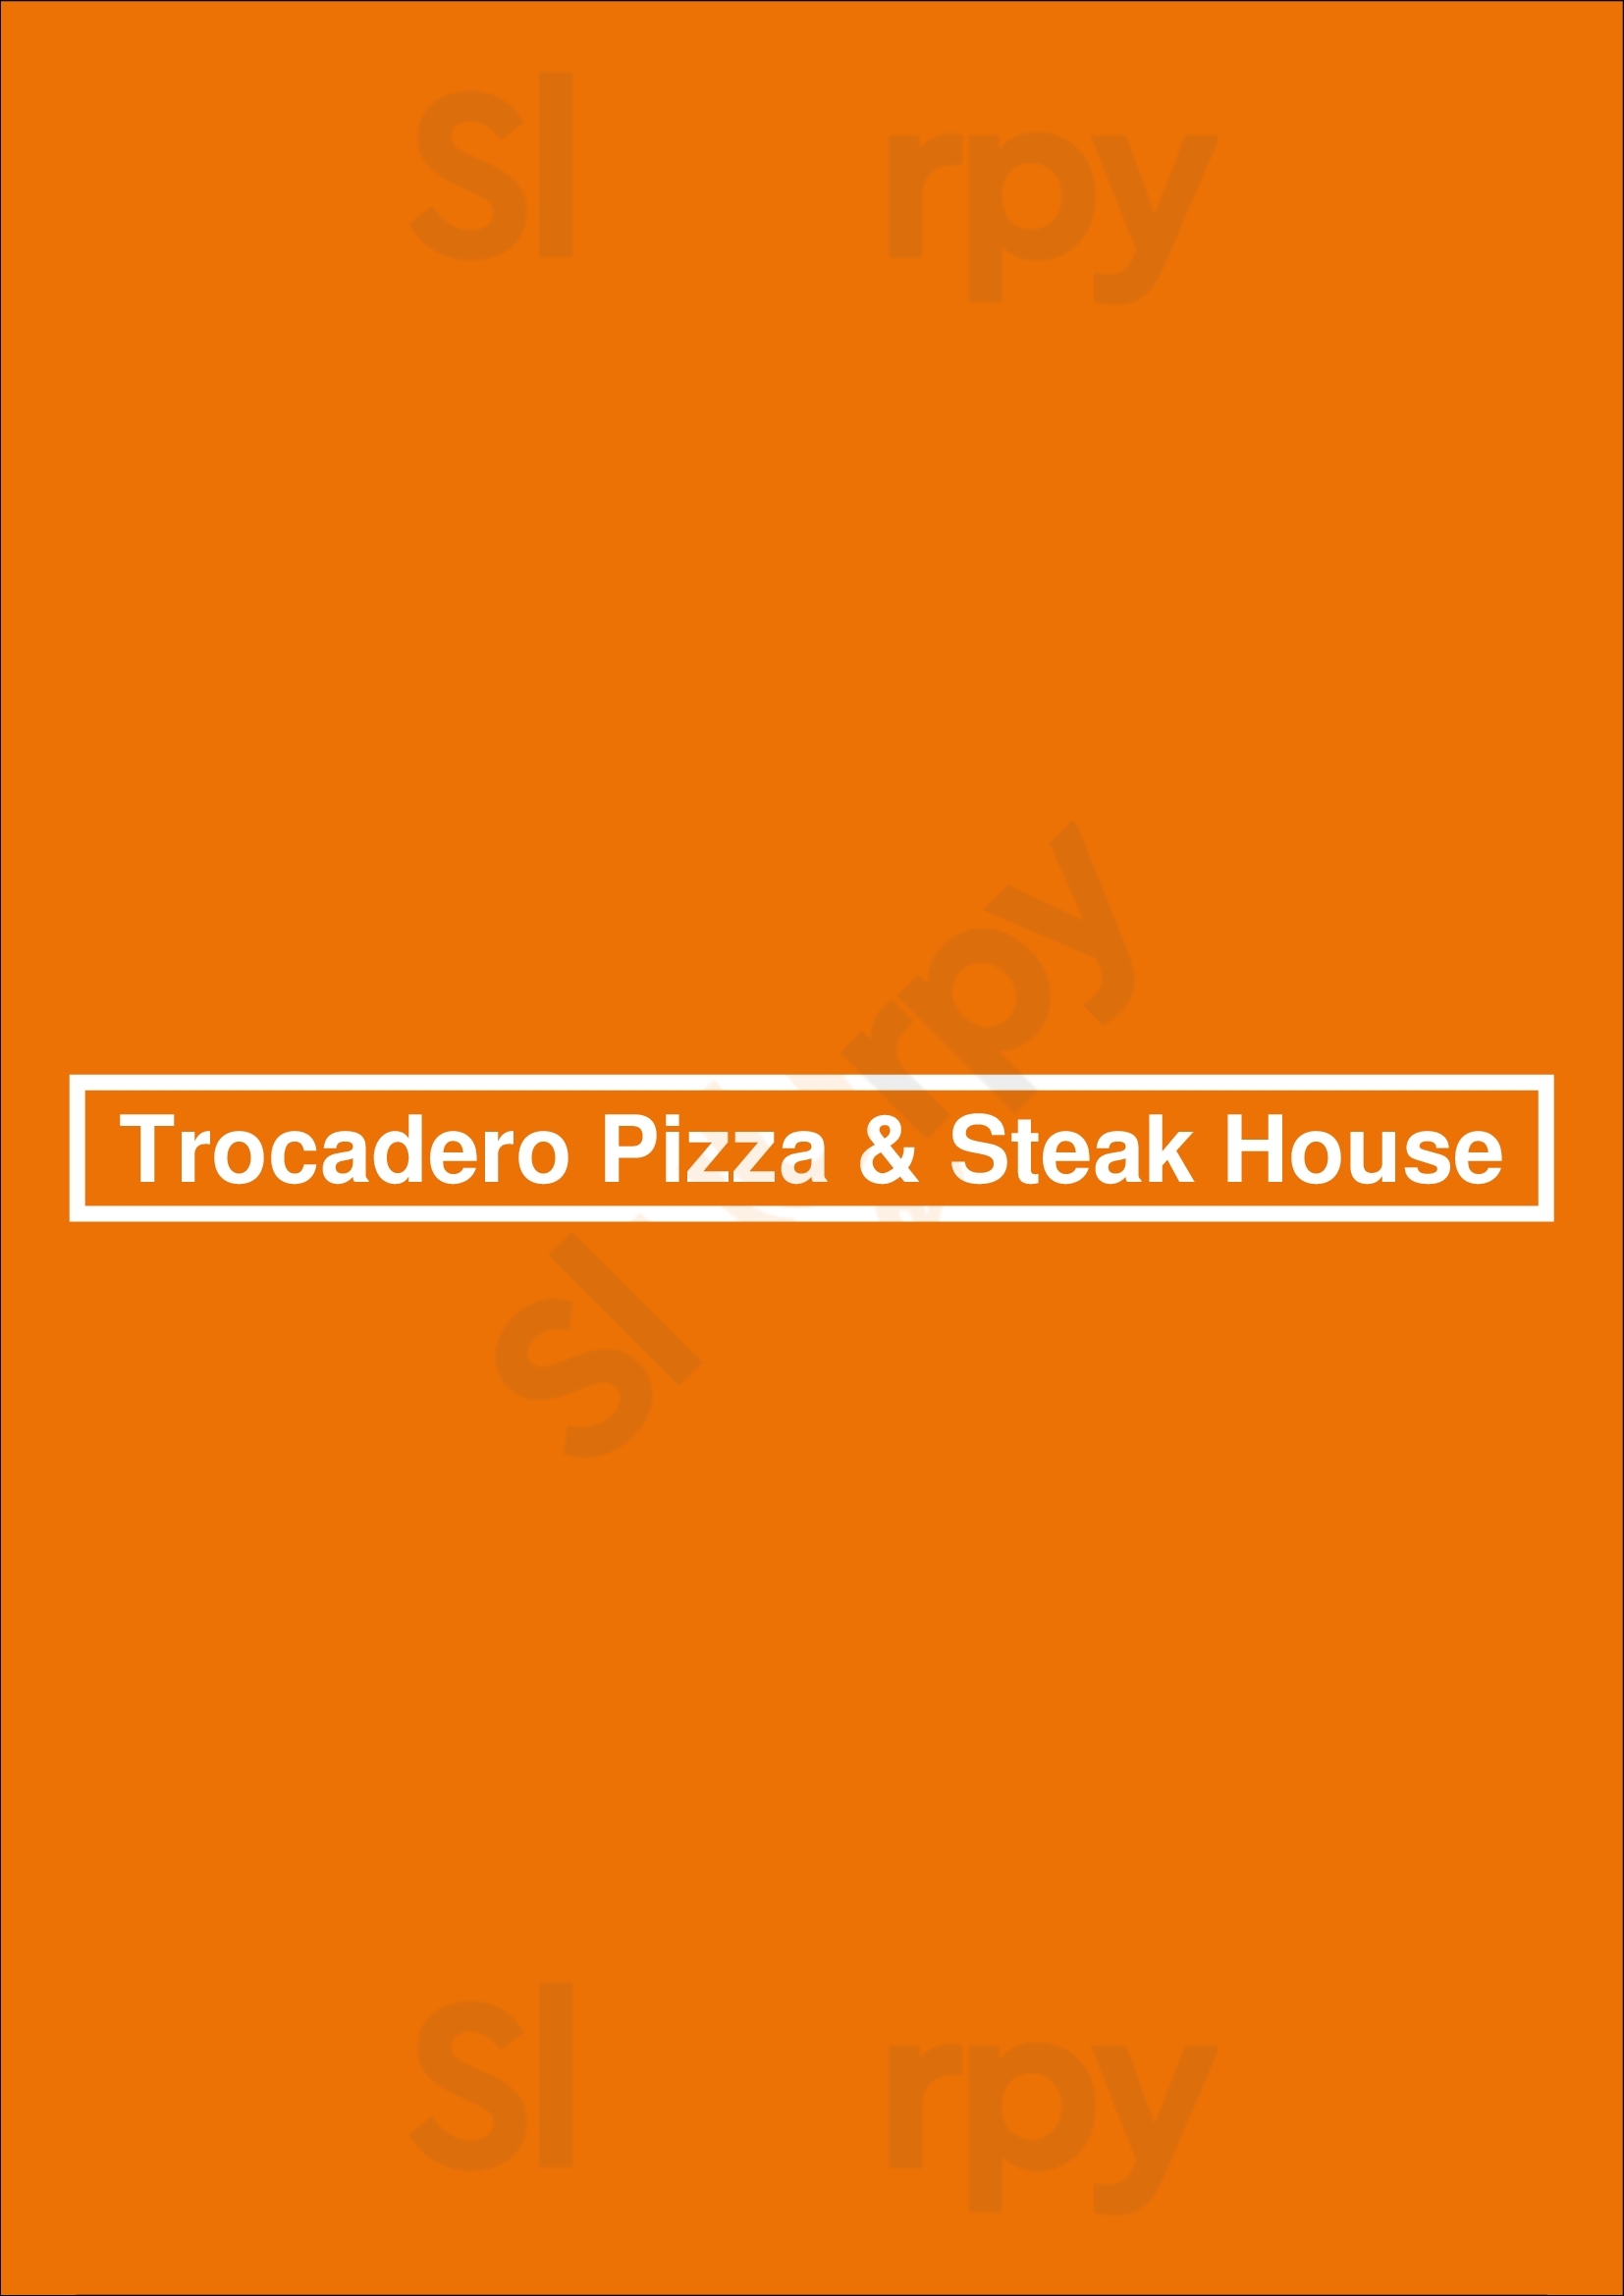 Trocadero Pizza & Steak House Vancouver Menu - 1